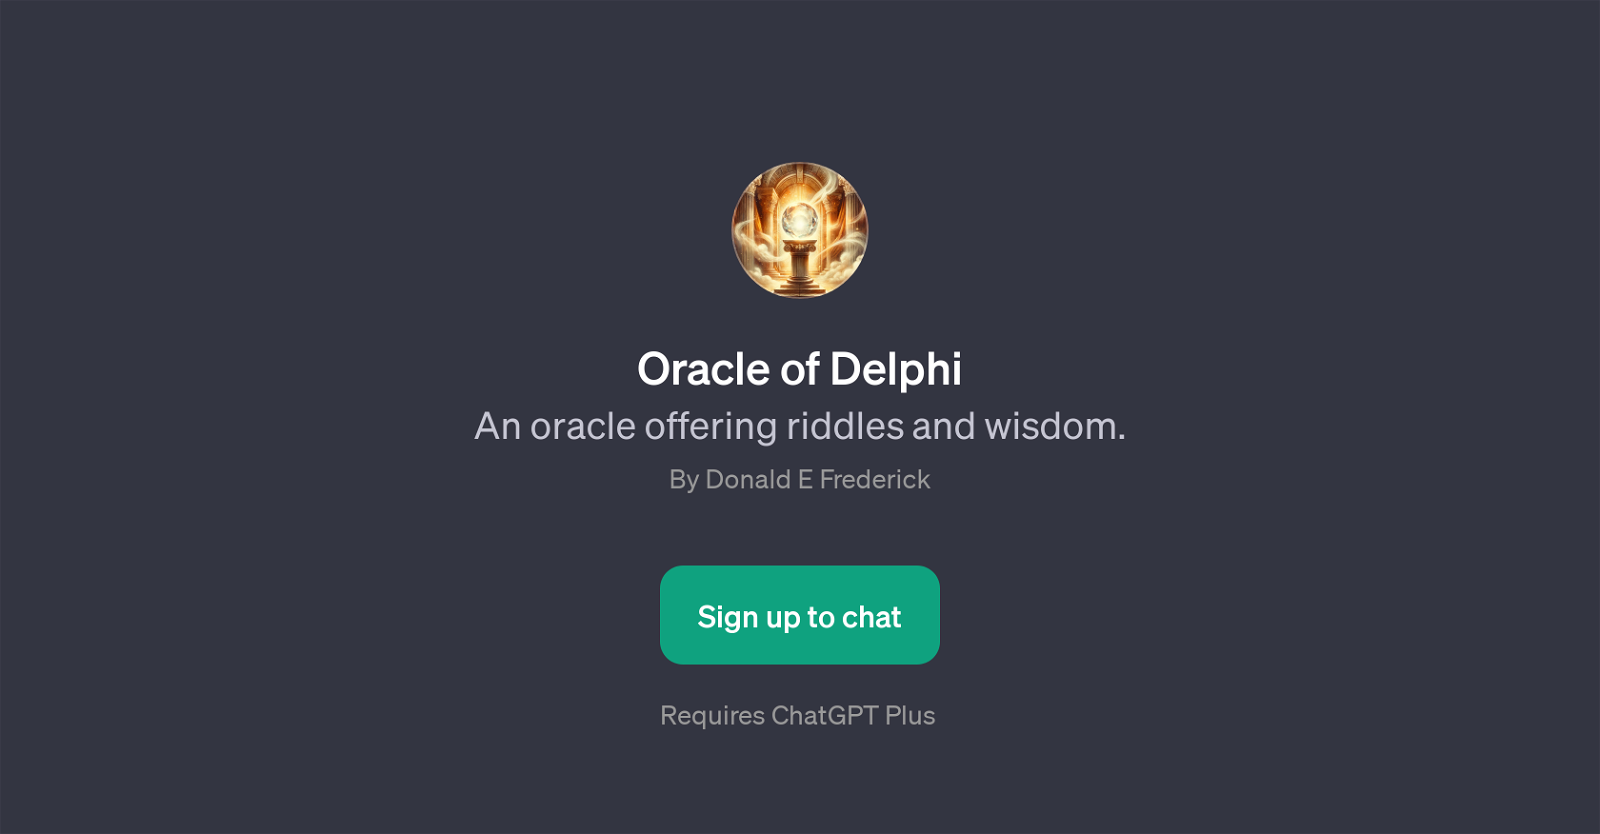 Oracle of Delphi website